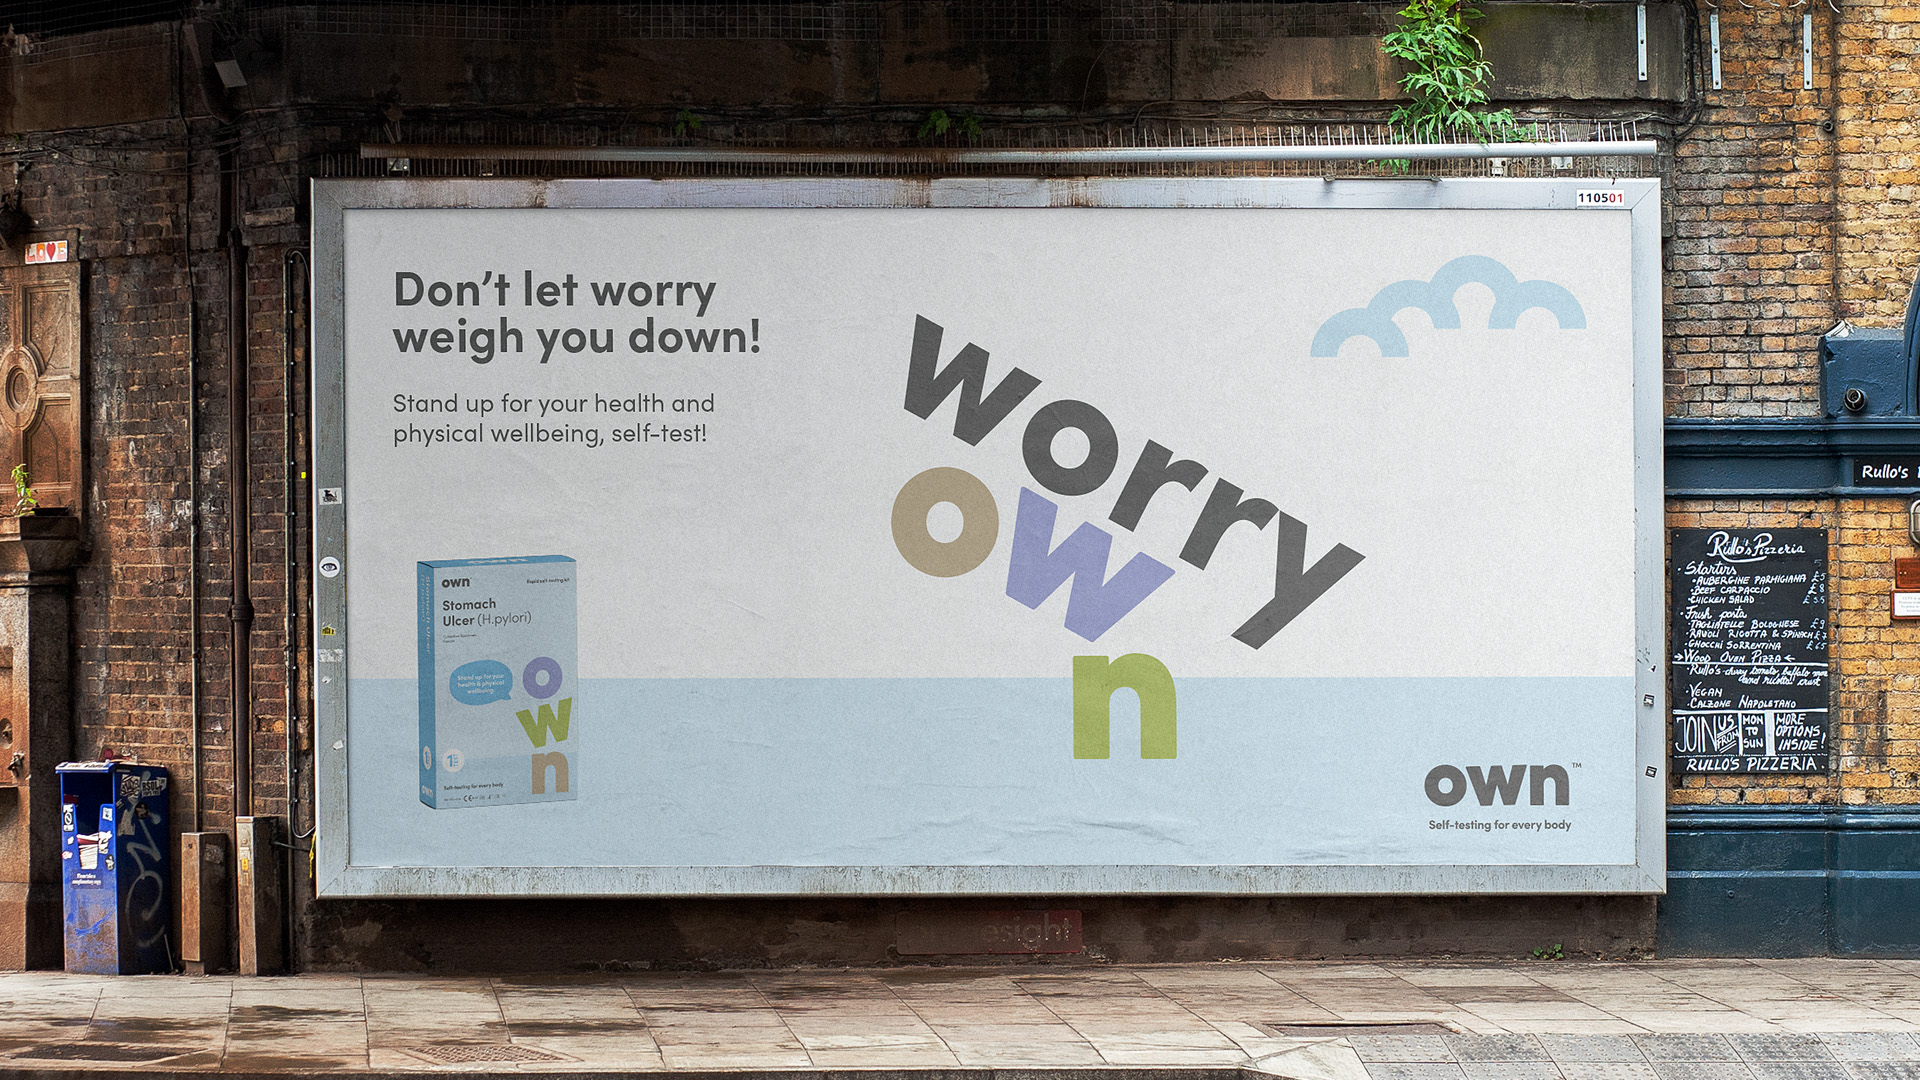 Own Self-testing billboard advertisement